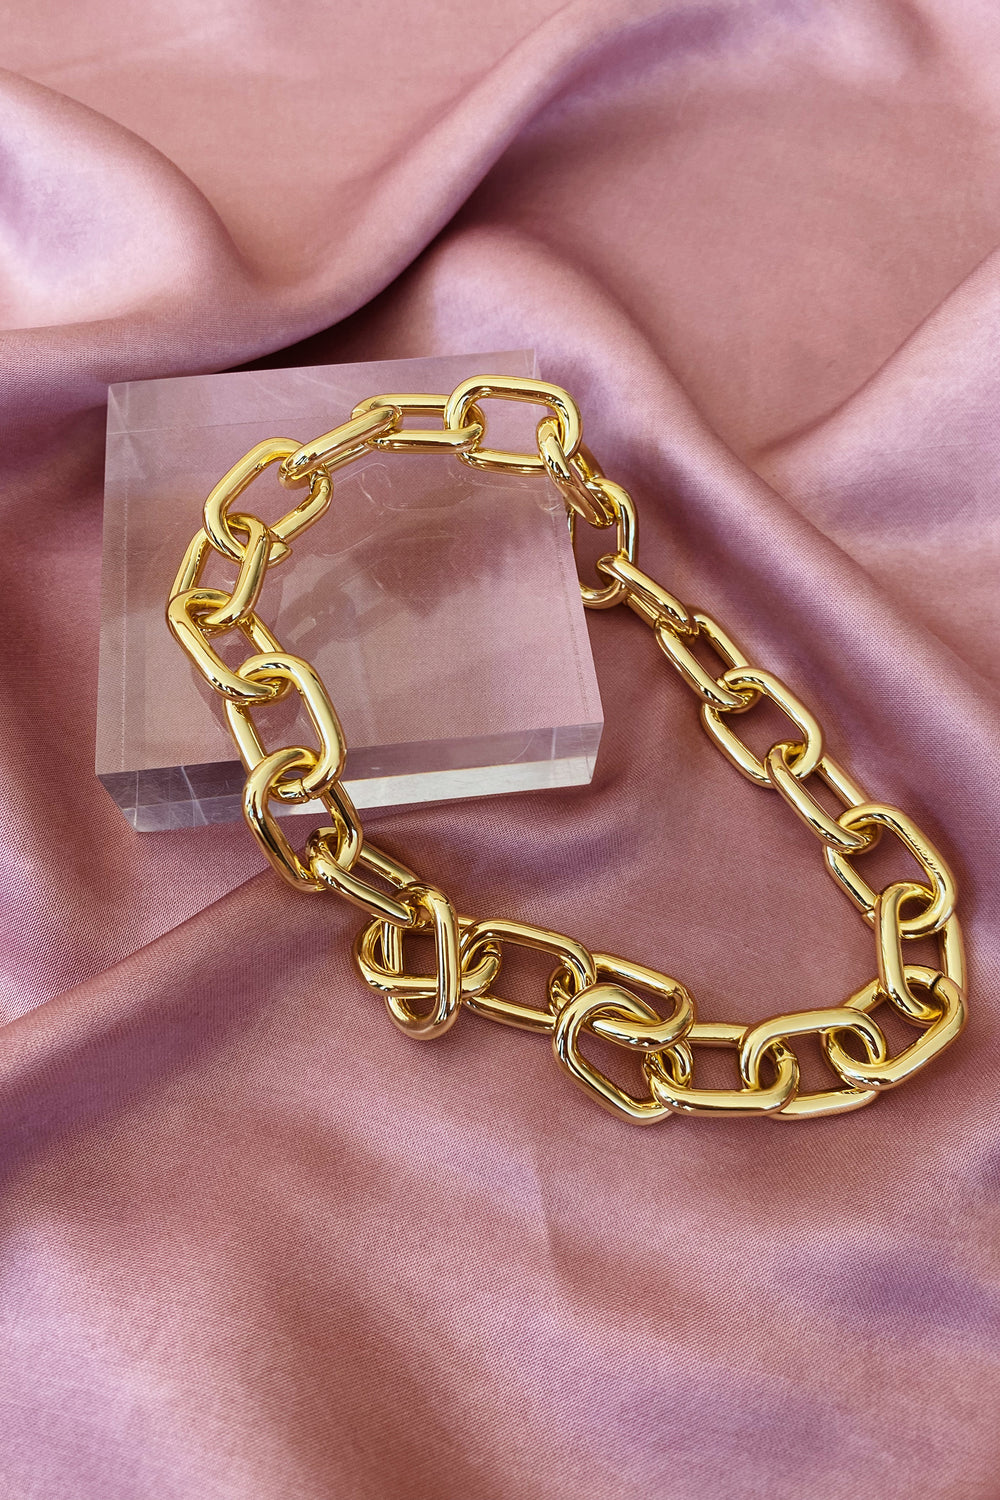 Machete Interchangeable Link Necklace in 14k Gold 15.5